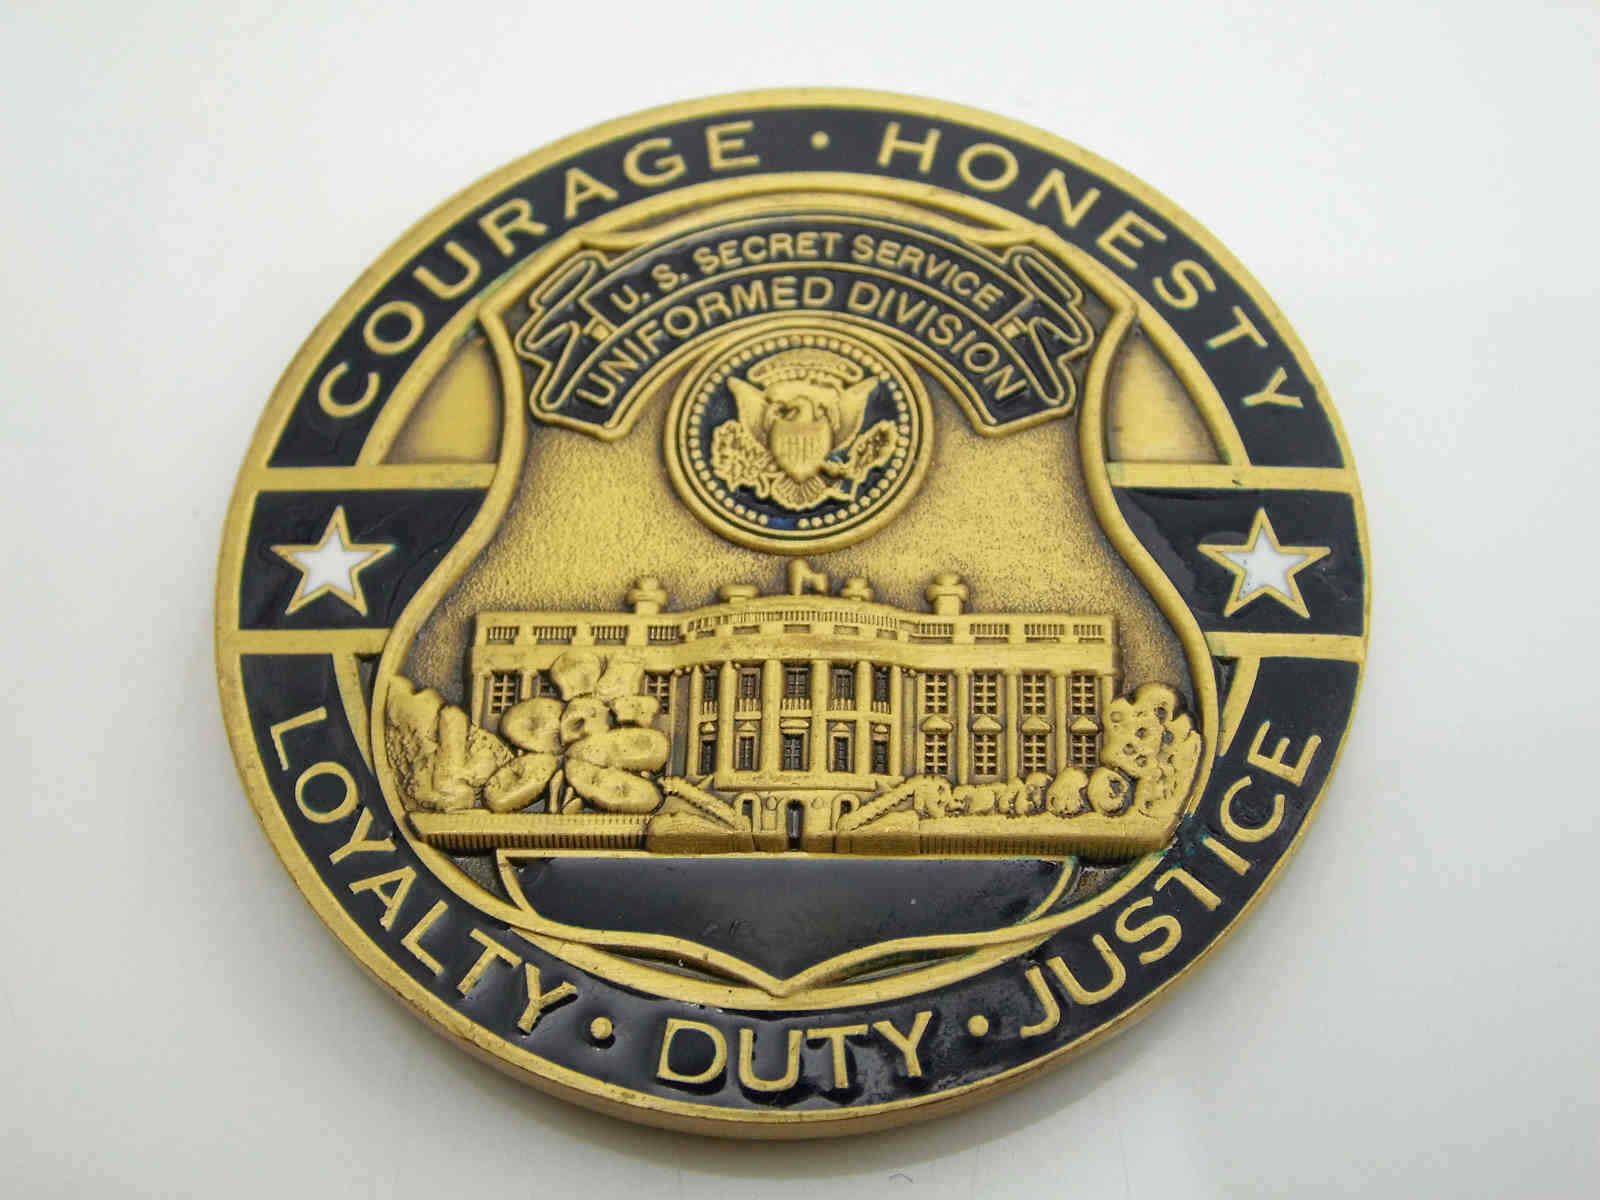 U.S. SECRET SERVICE UNIFORMED DIVISION OATH OF OFFICE CHALLENGE COIN